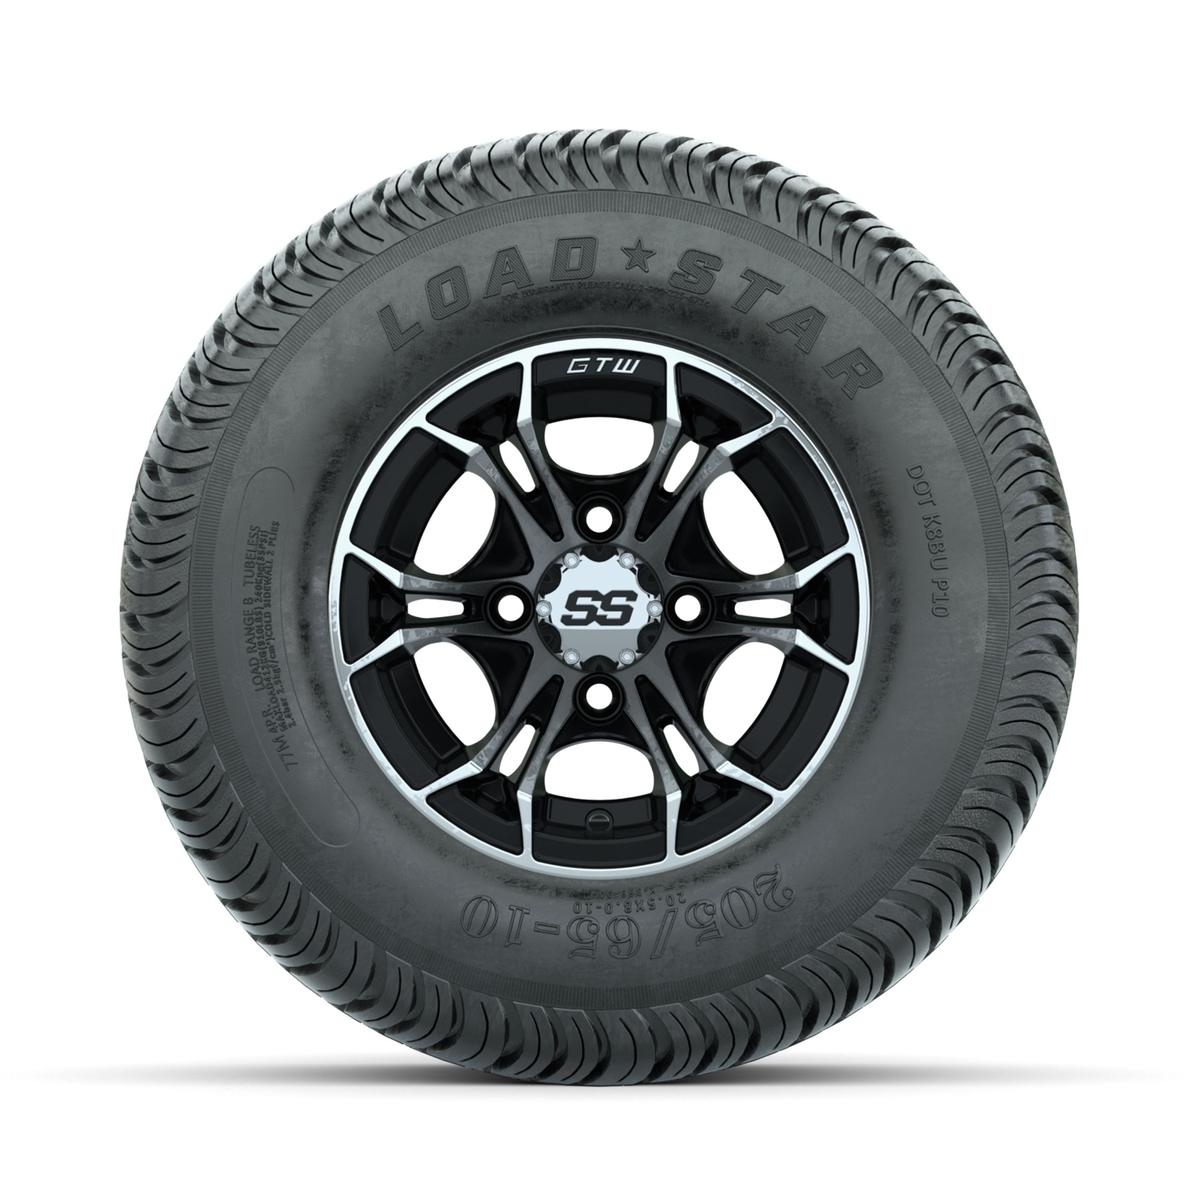 GTW Spyder Machined/Black 10 in Wheels with 205/65-10 Kenda Load Star Street Tires – Full Set